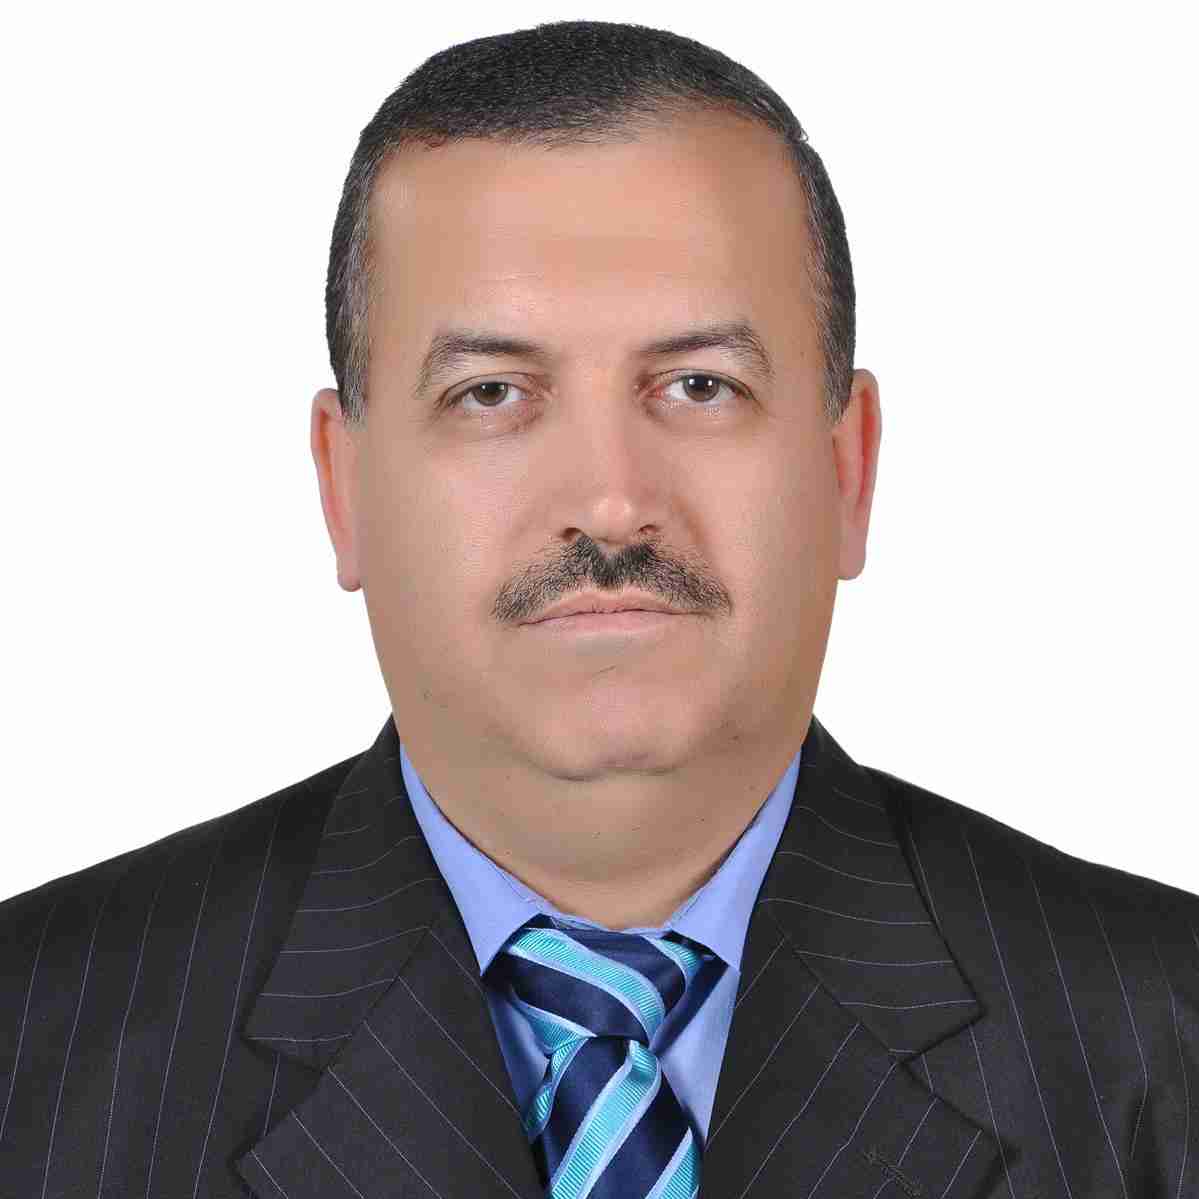 Profile image of Mr Mohammad Al Bahloul